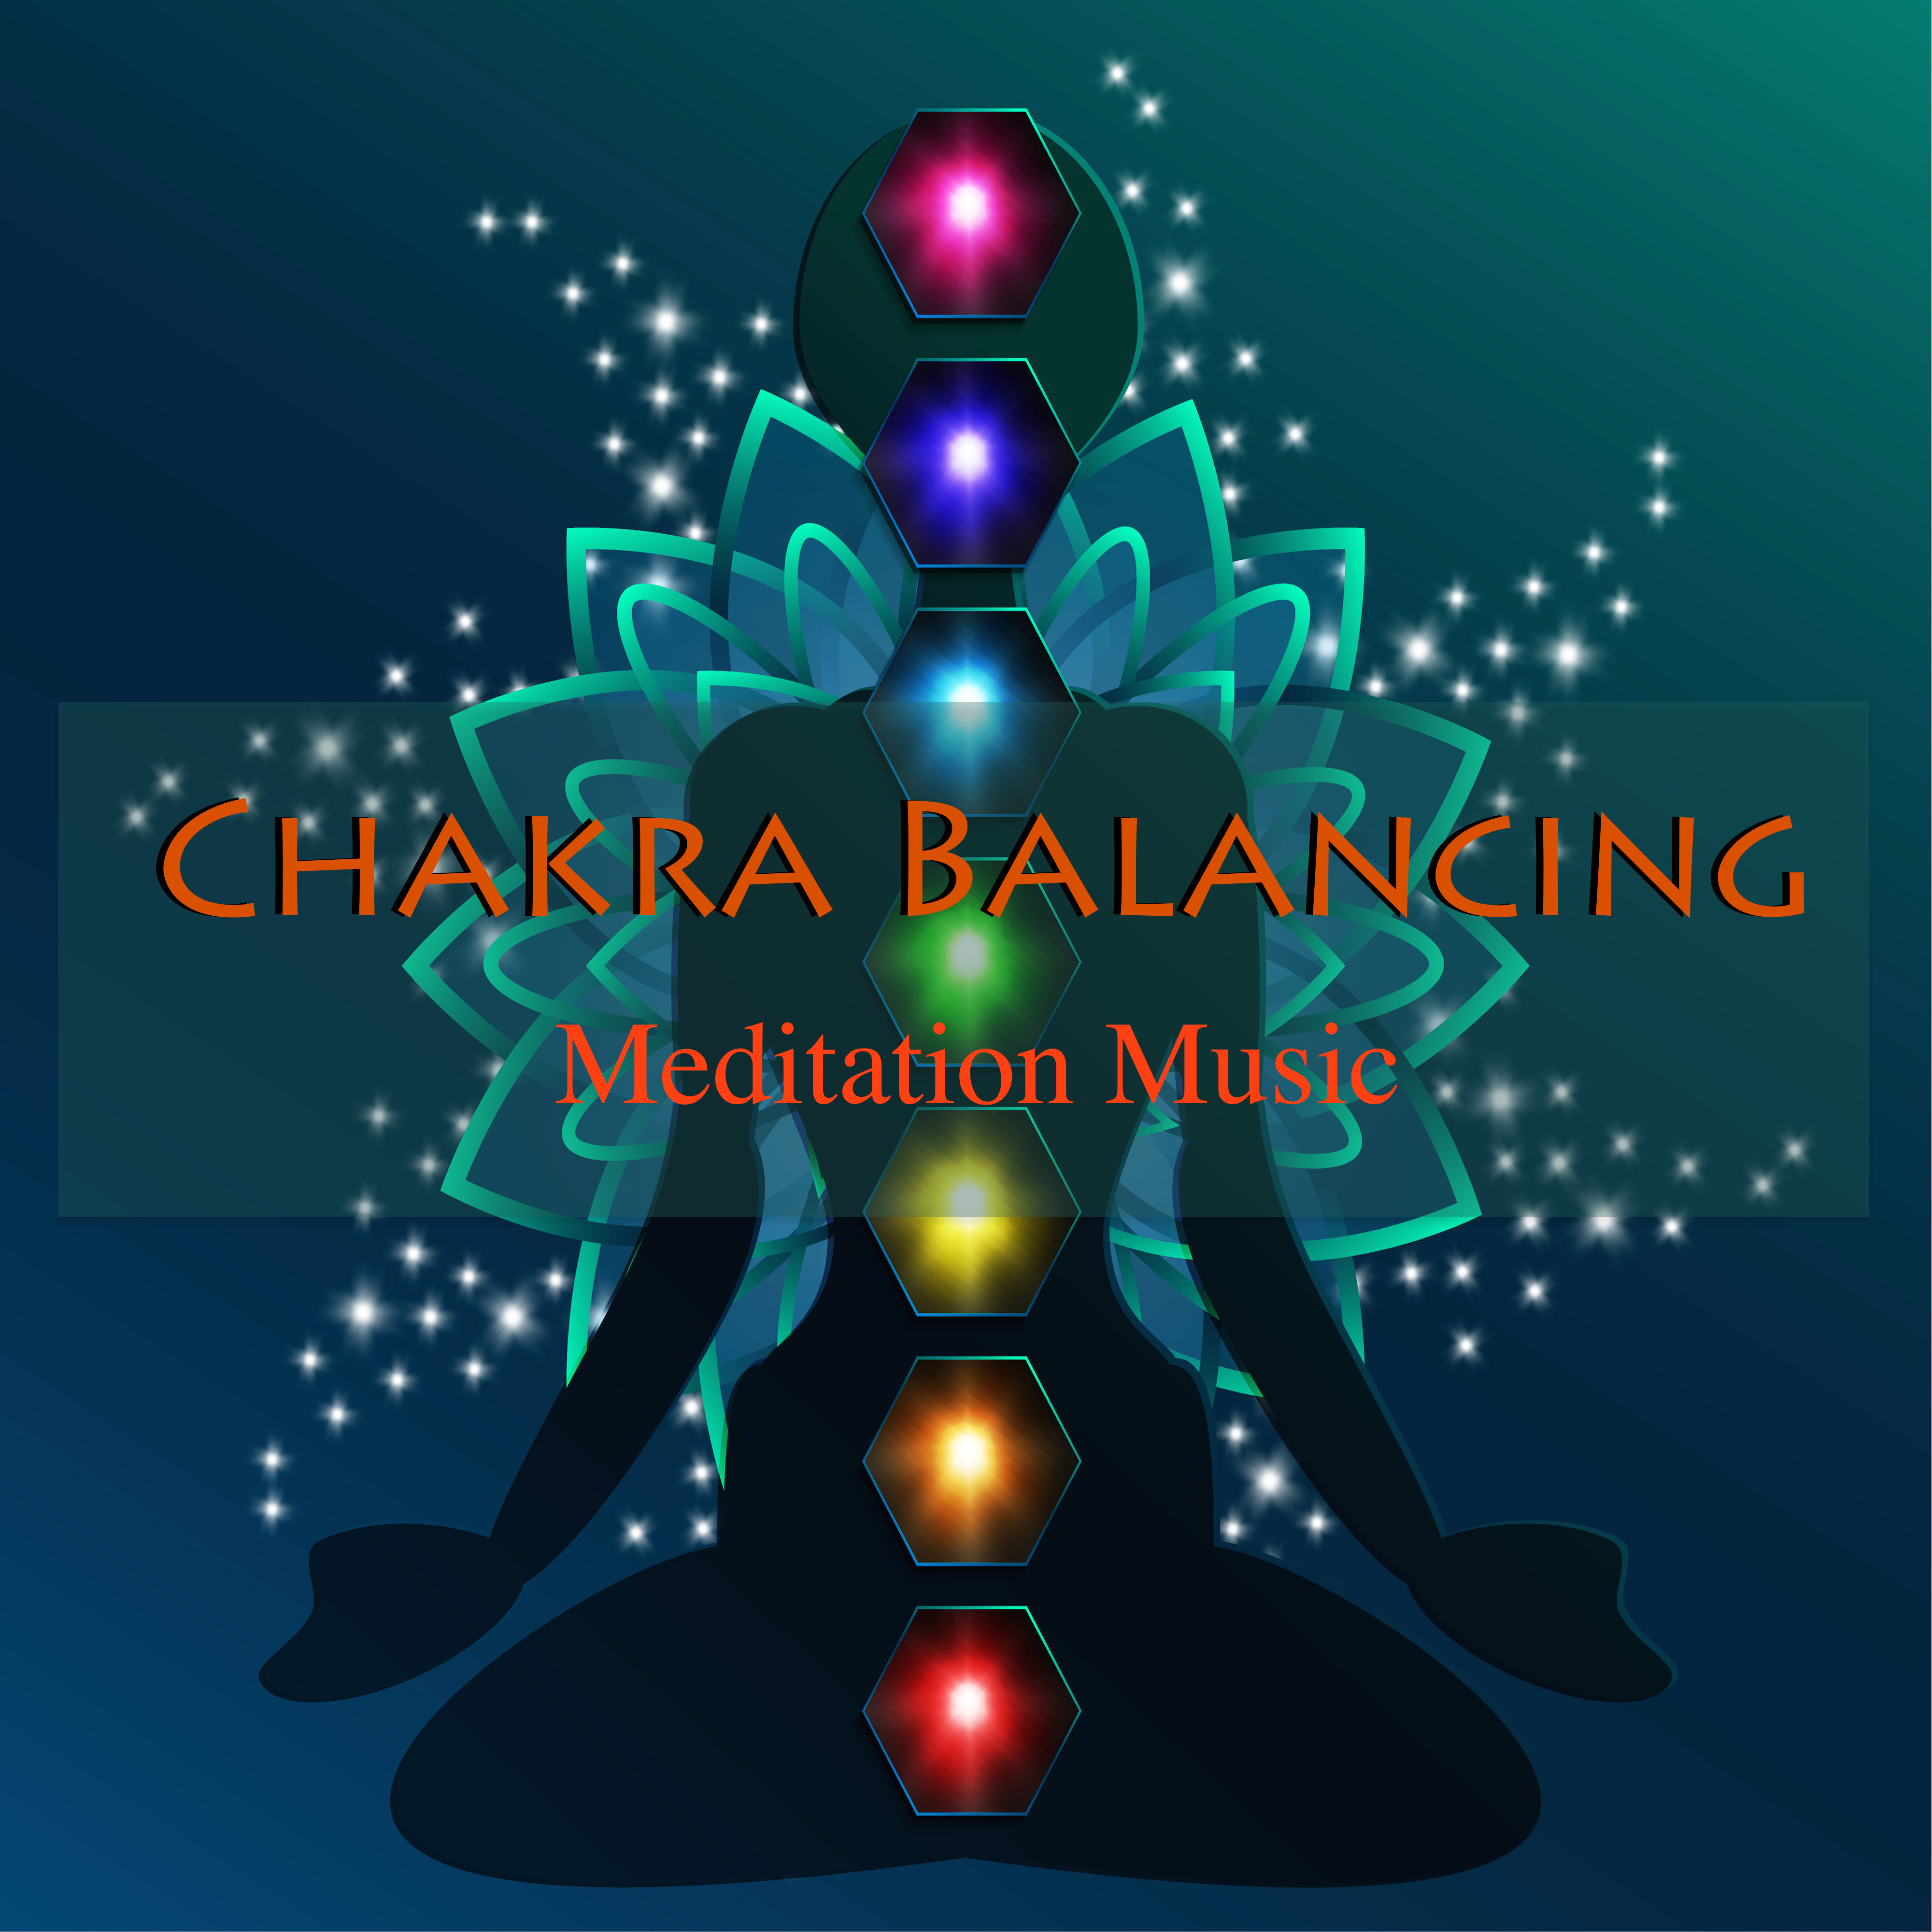 Chakra Balancing Meditation Music - 20 Relaxing Songs for the 7 Chakras